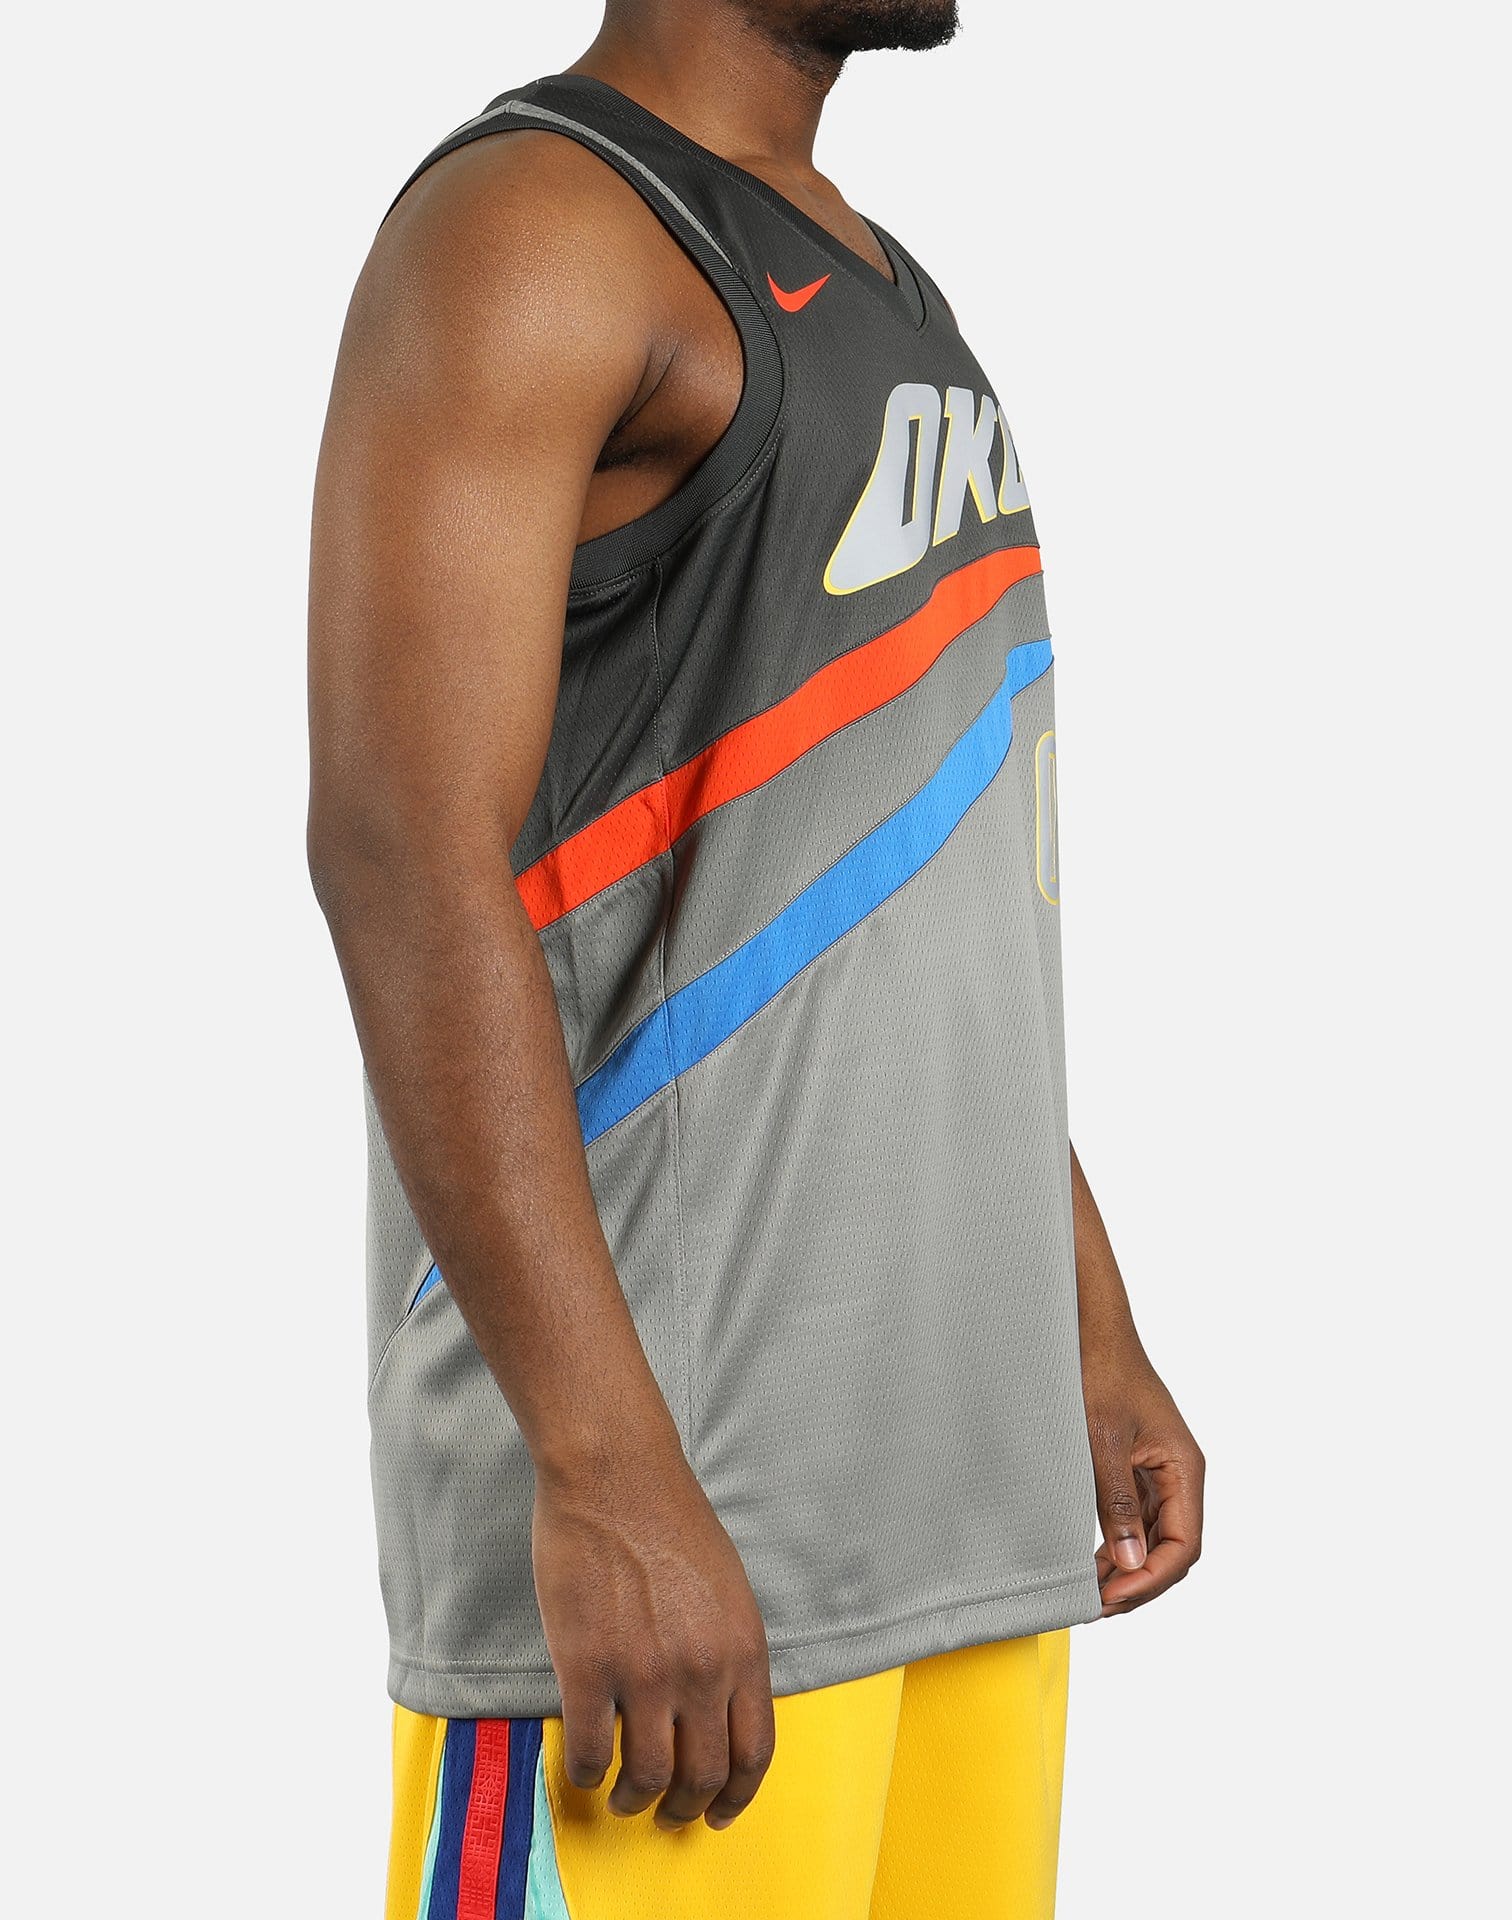 Russell Westbrook Oklahoma City Thunder Nike Swingman Jersey Gray - City  Edition